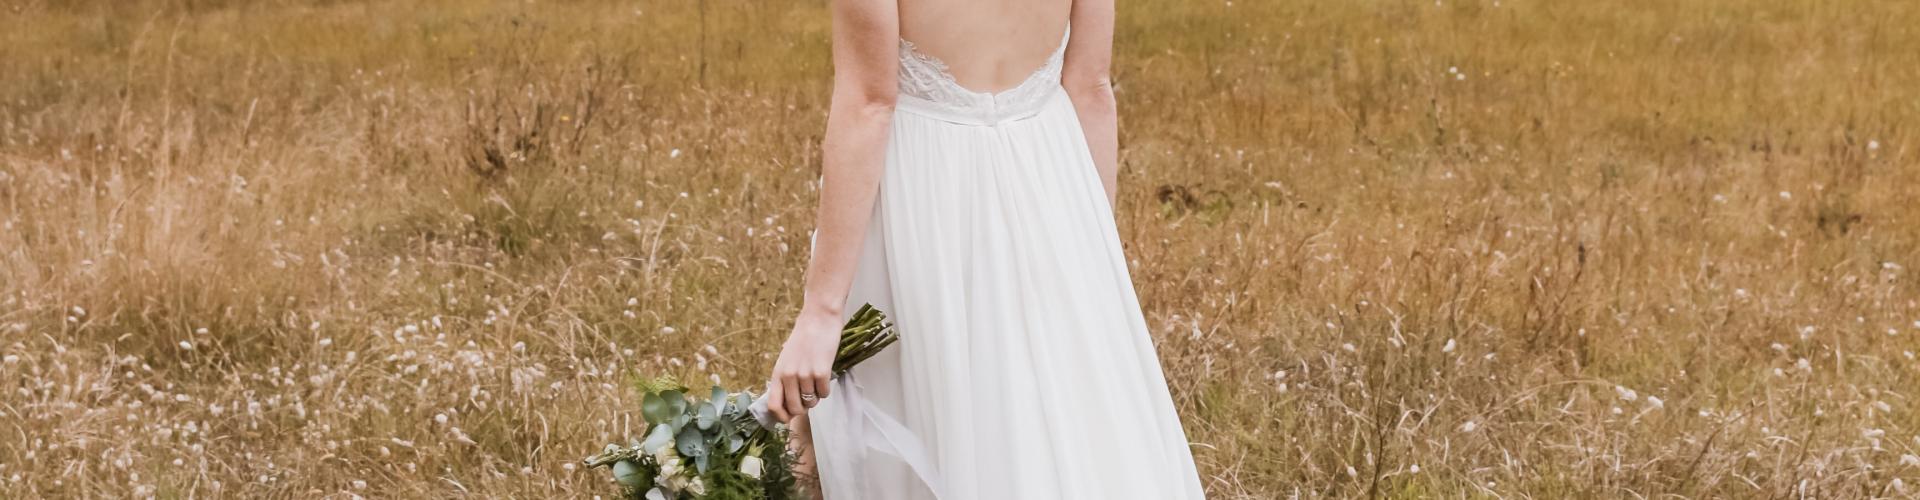 Mariage minimaliste : comment choisir sa tenue ? 